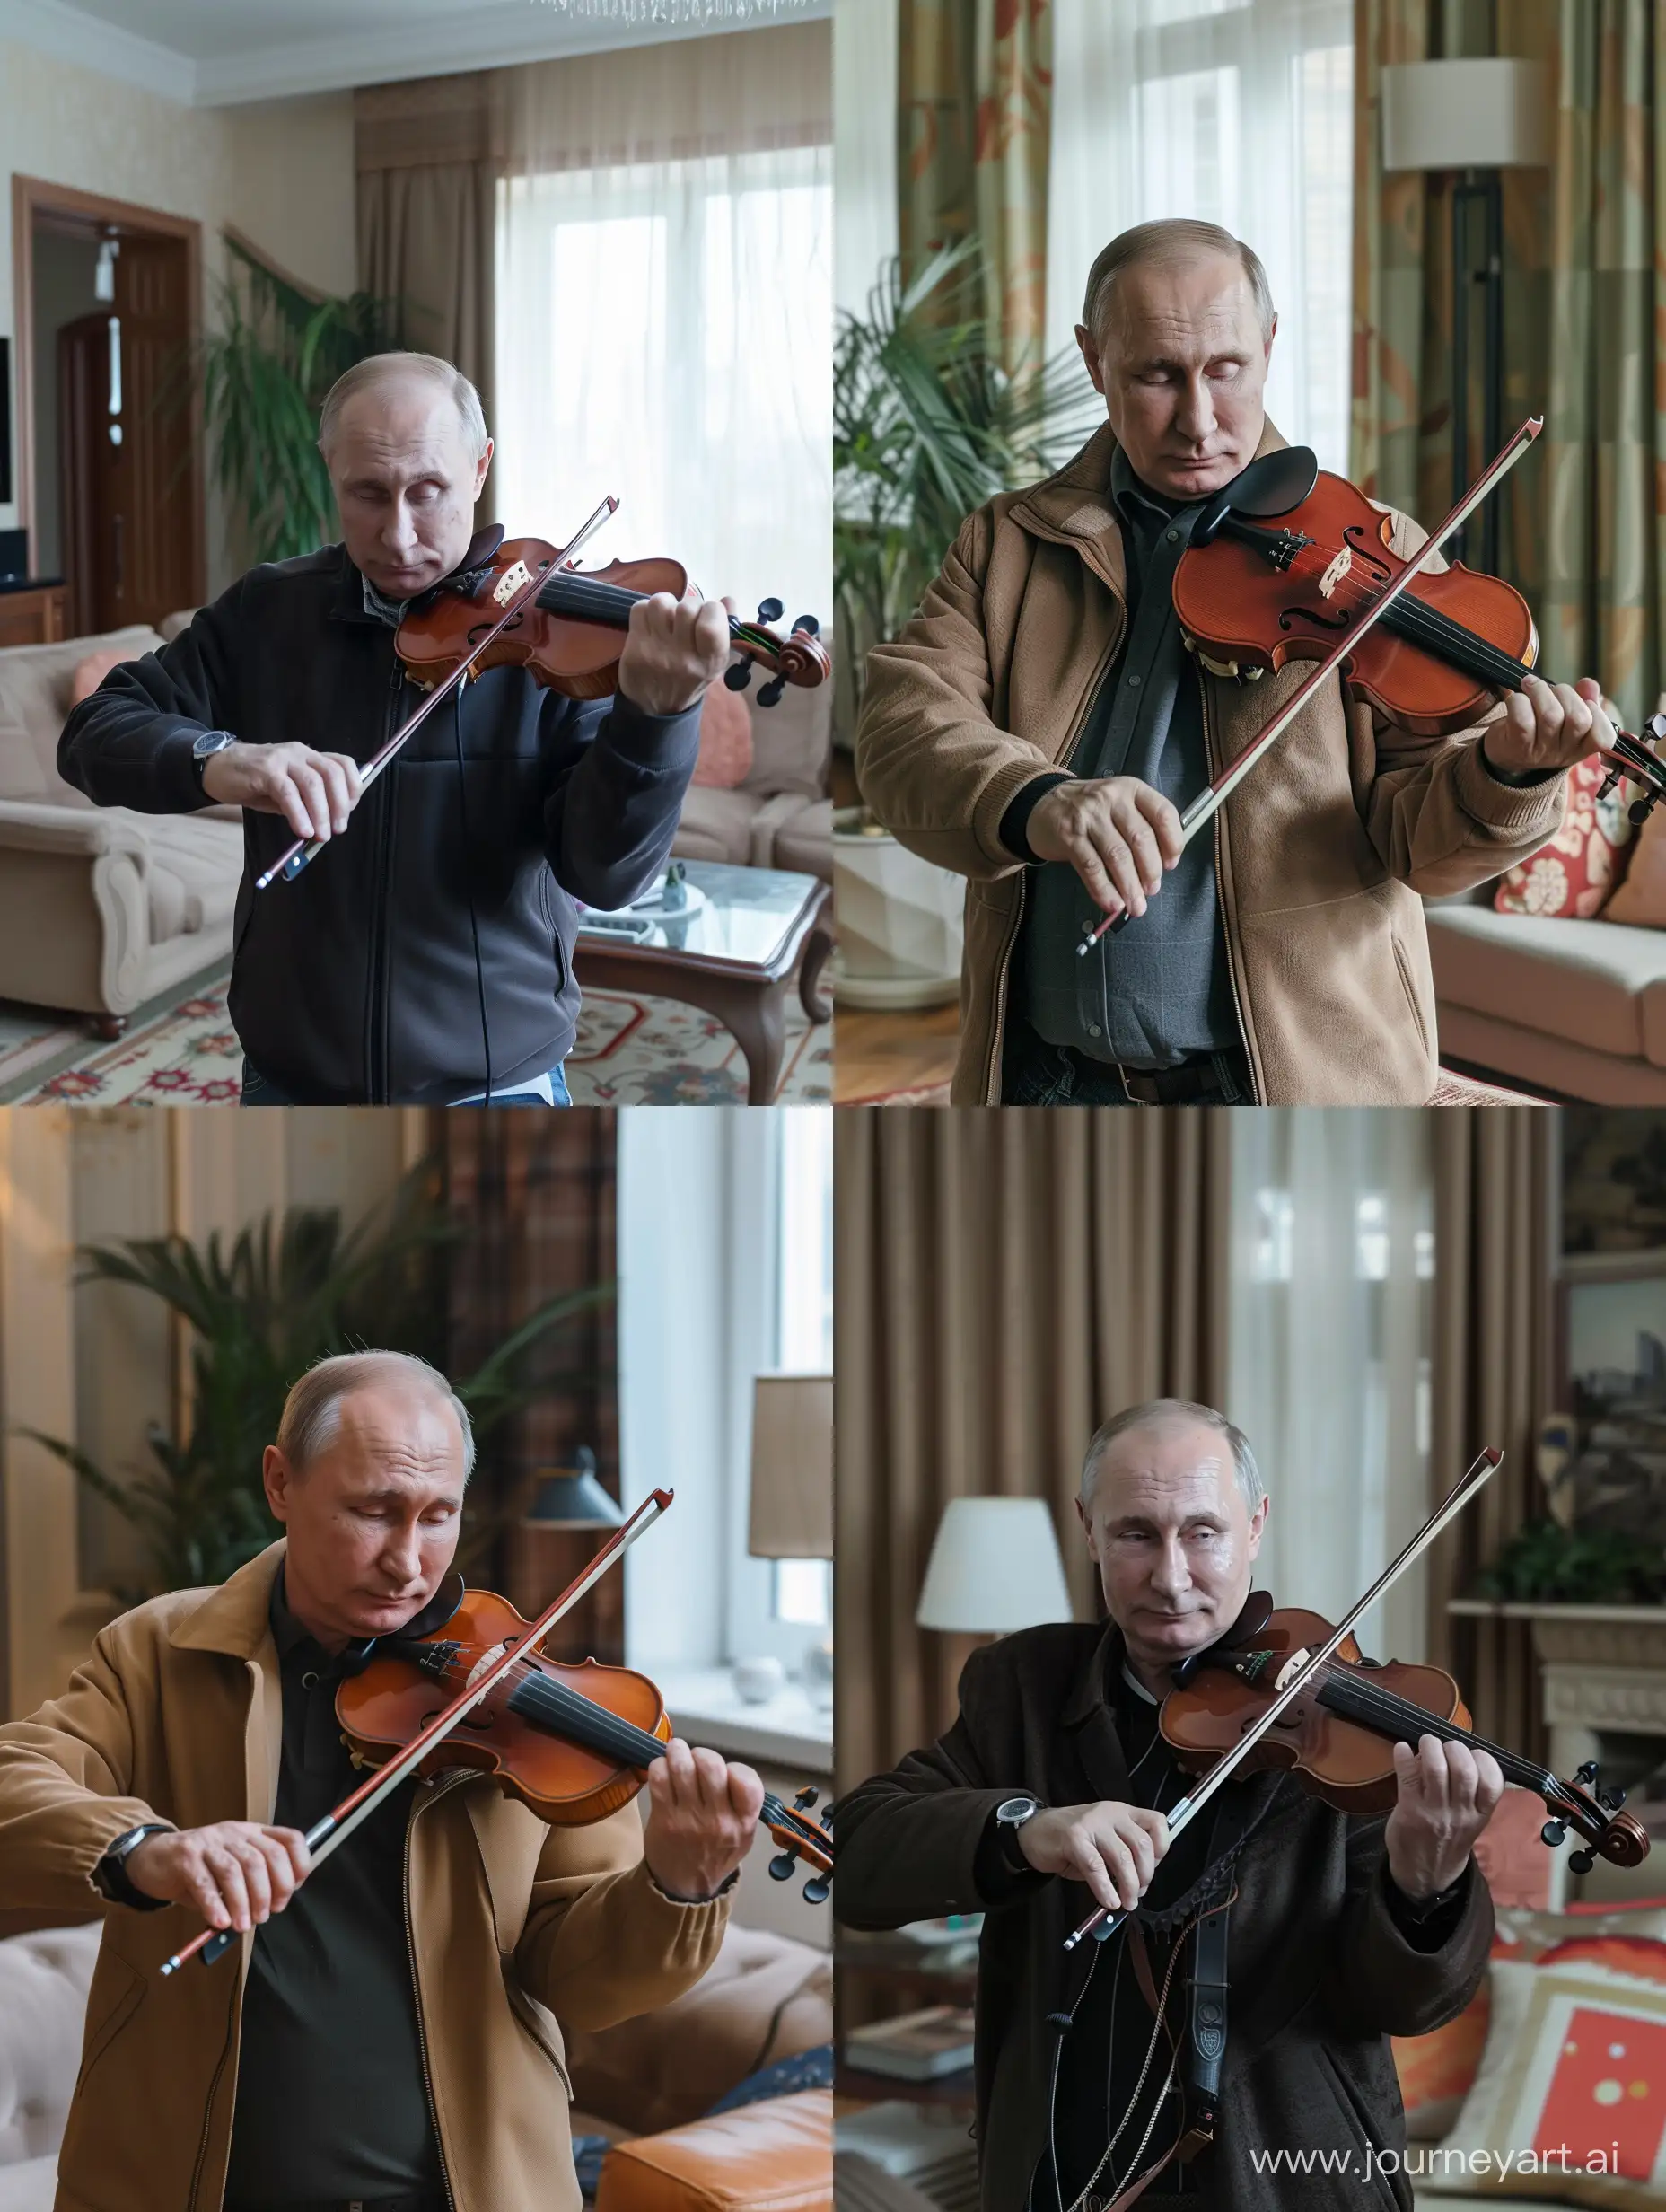 Vladimir-Putin-Playing-Violin-in-a-Living-Room